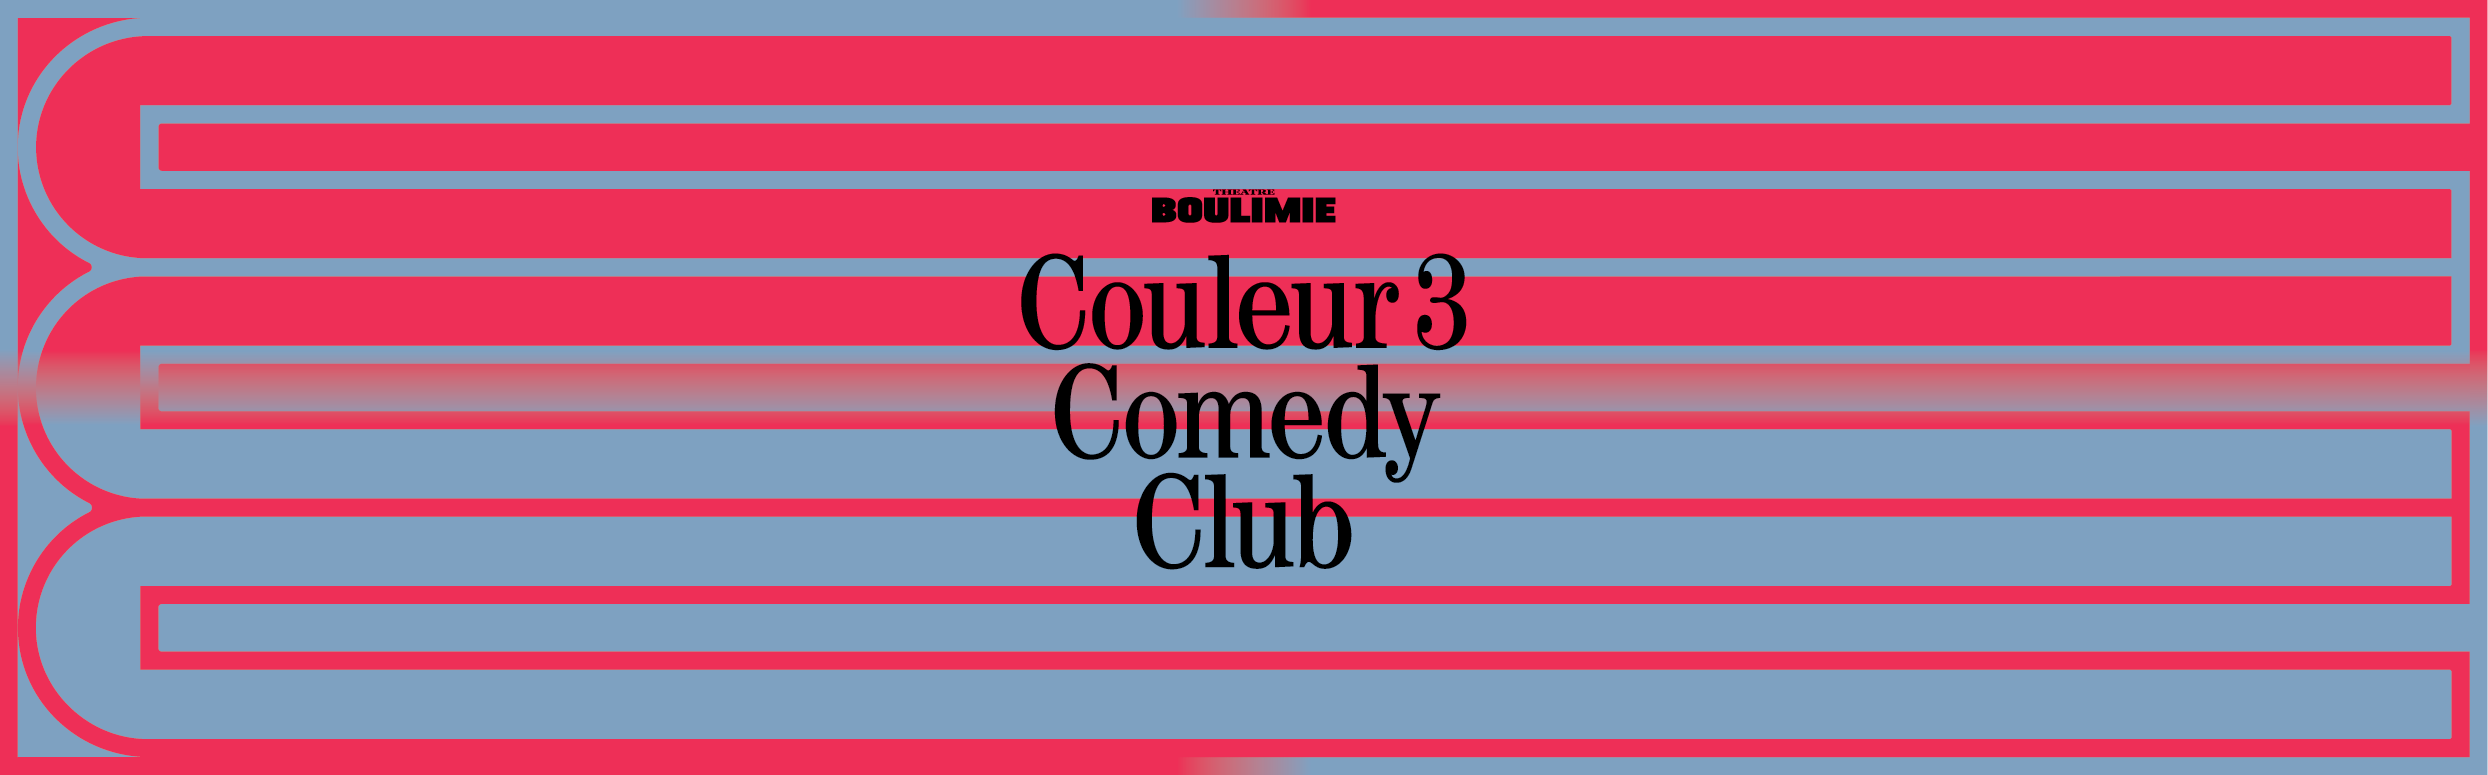 Couleur 3 Comedy Club 2022.